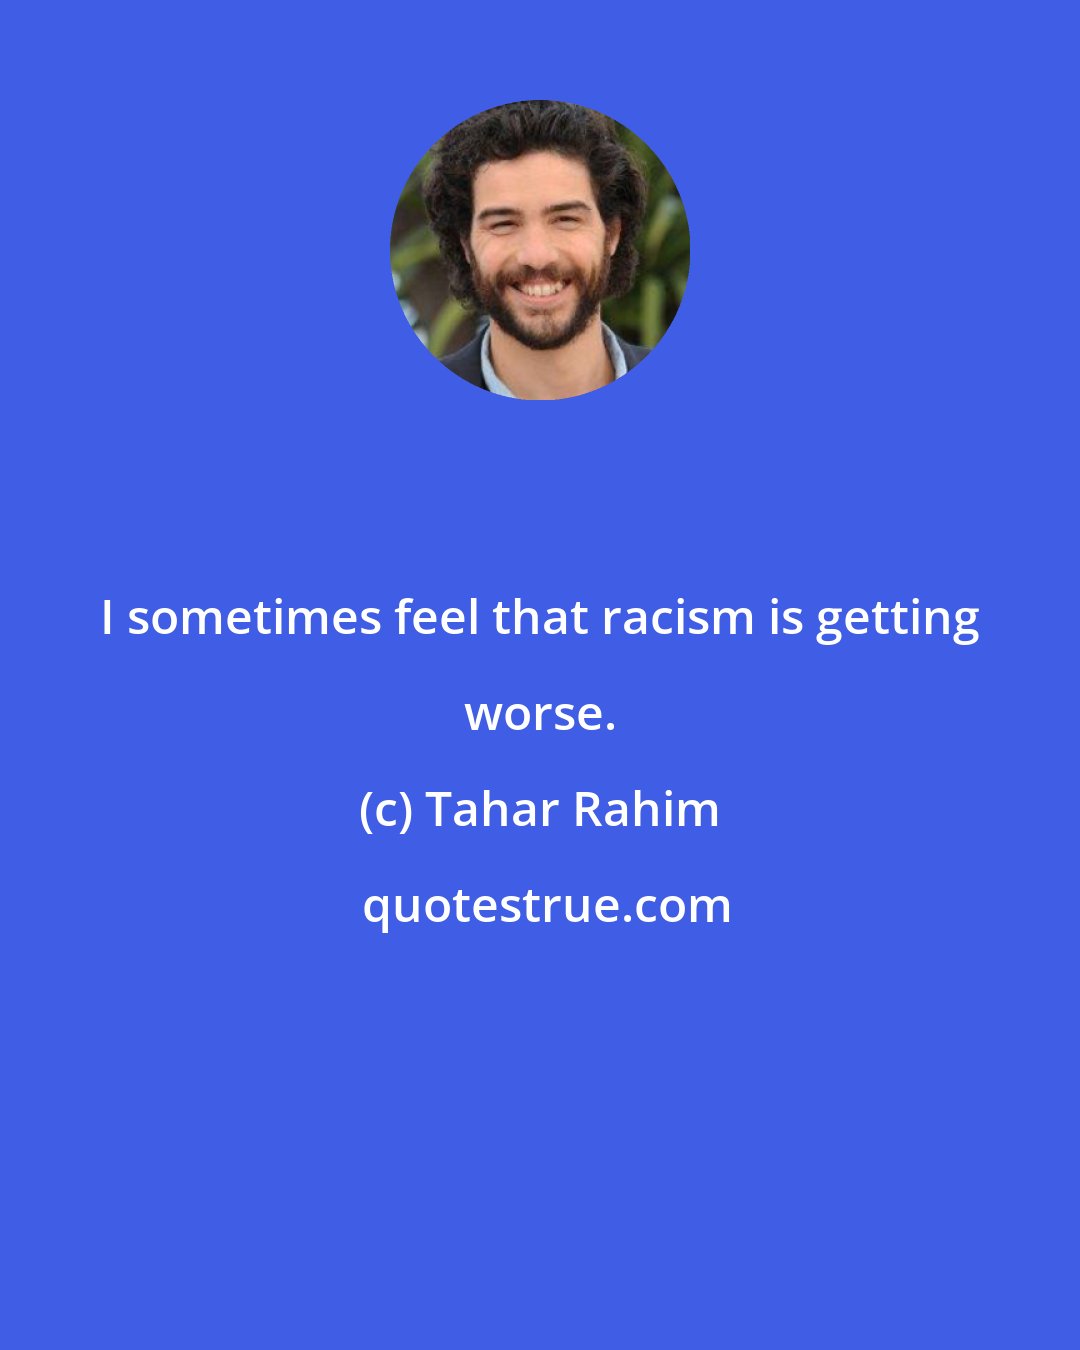 Tahar Rahim: I sometimes feel that racism is getting worse.